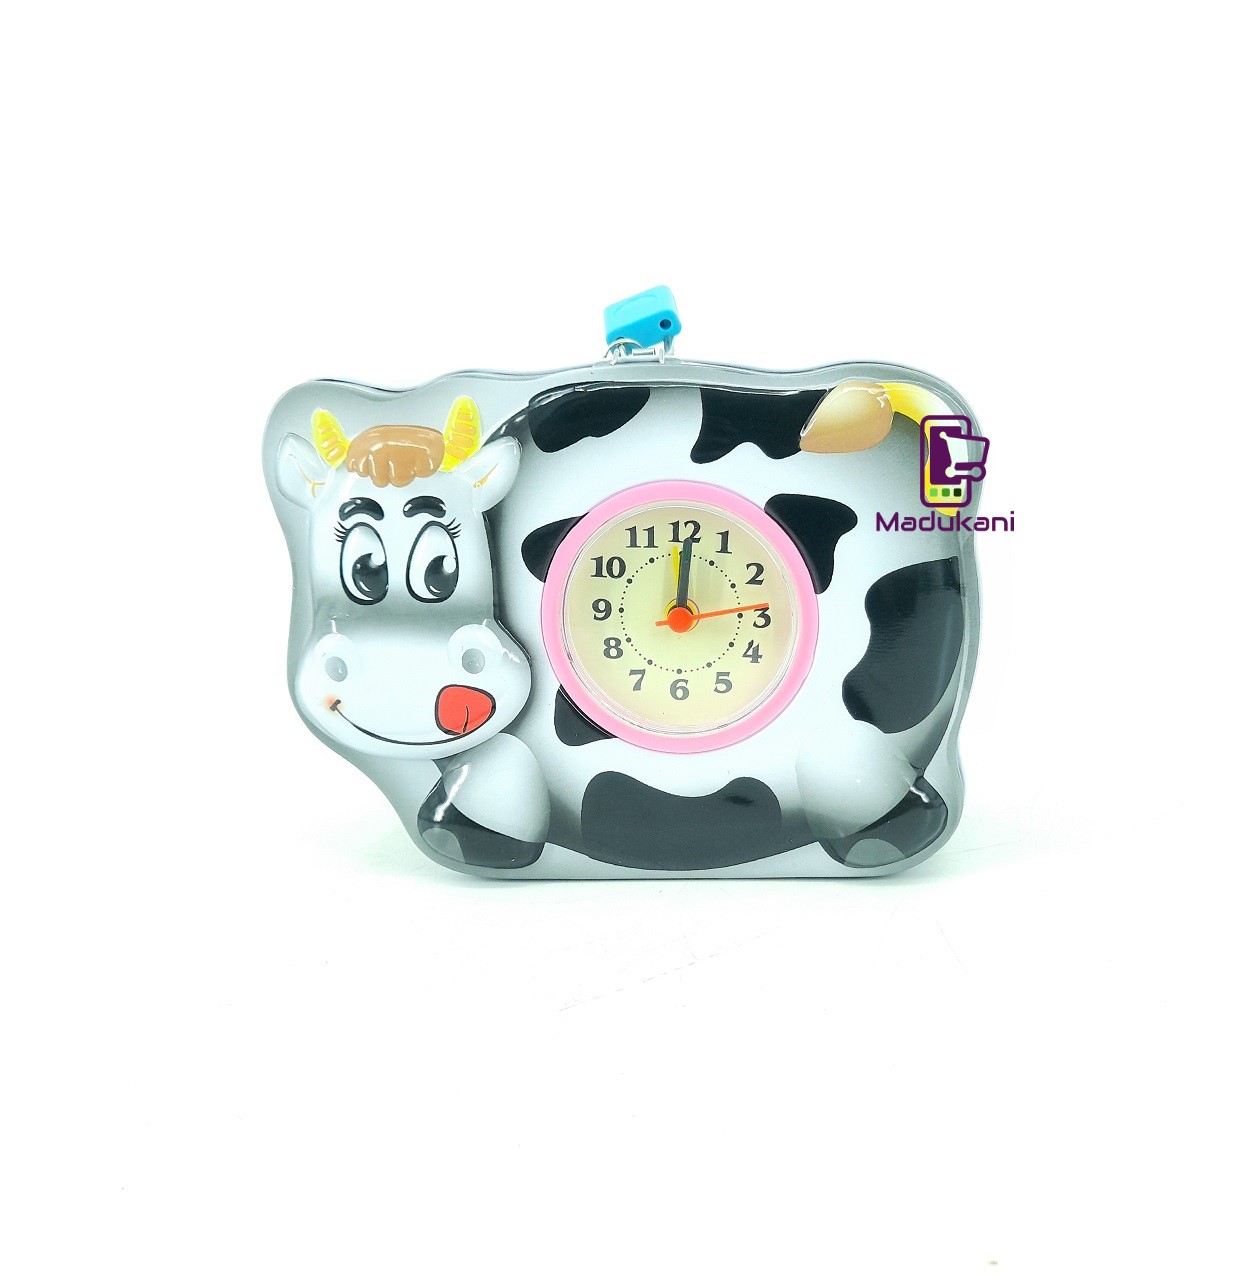 Decorative Cartoon Cow Piggy Bank with Clock Face - Madukani Online Shop